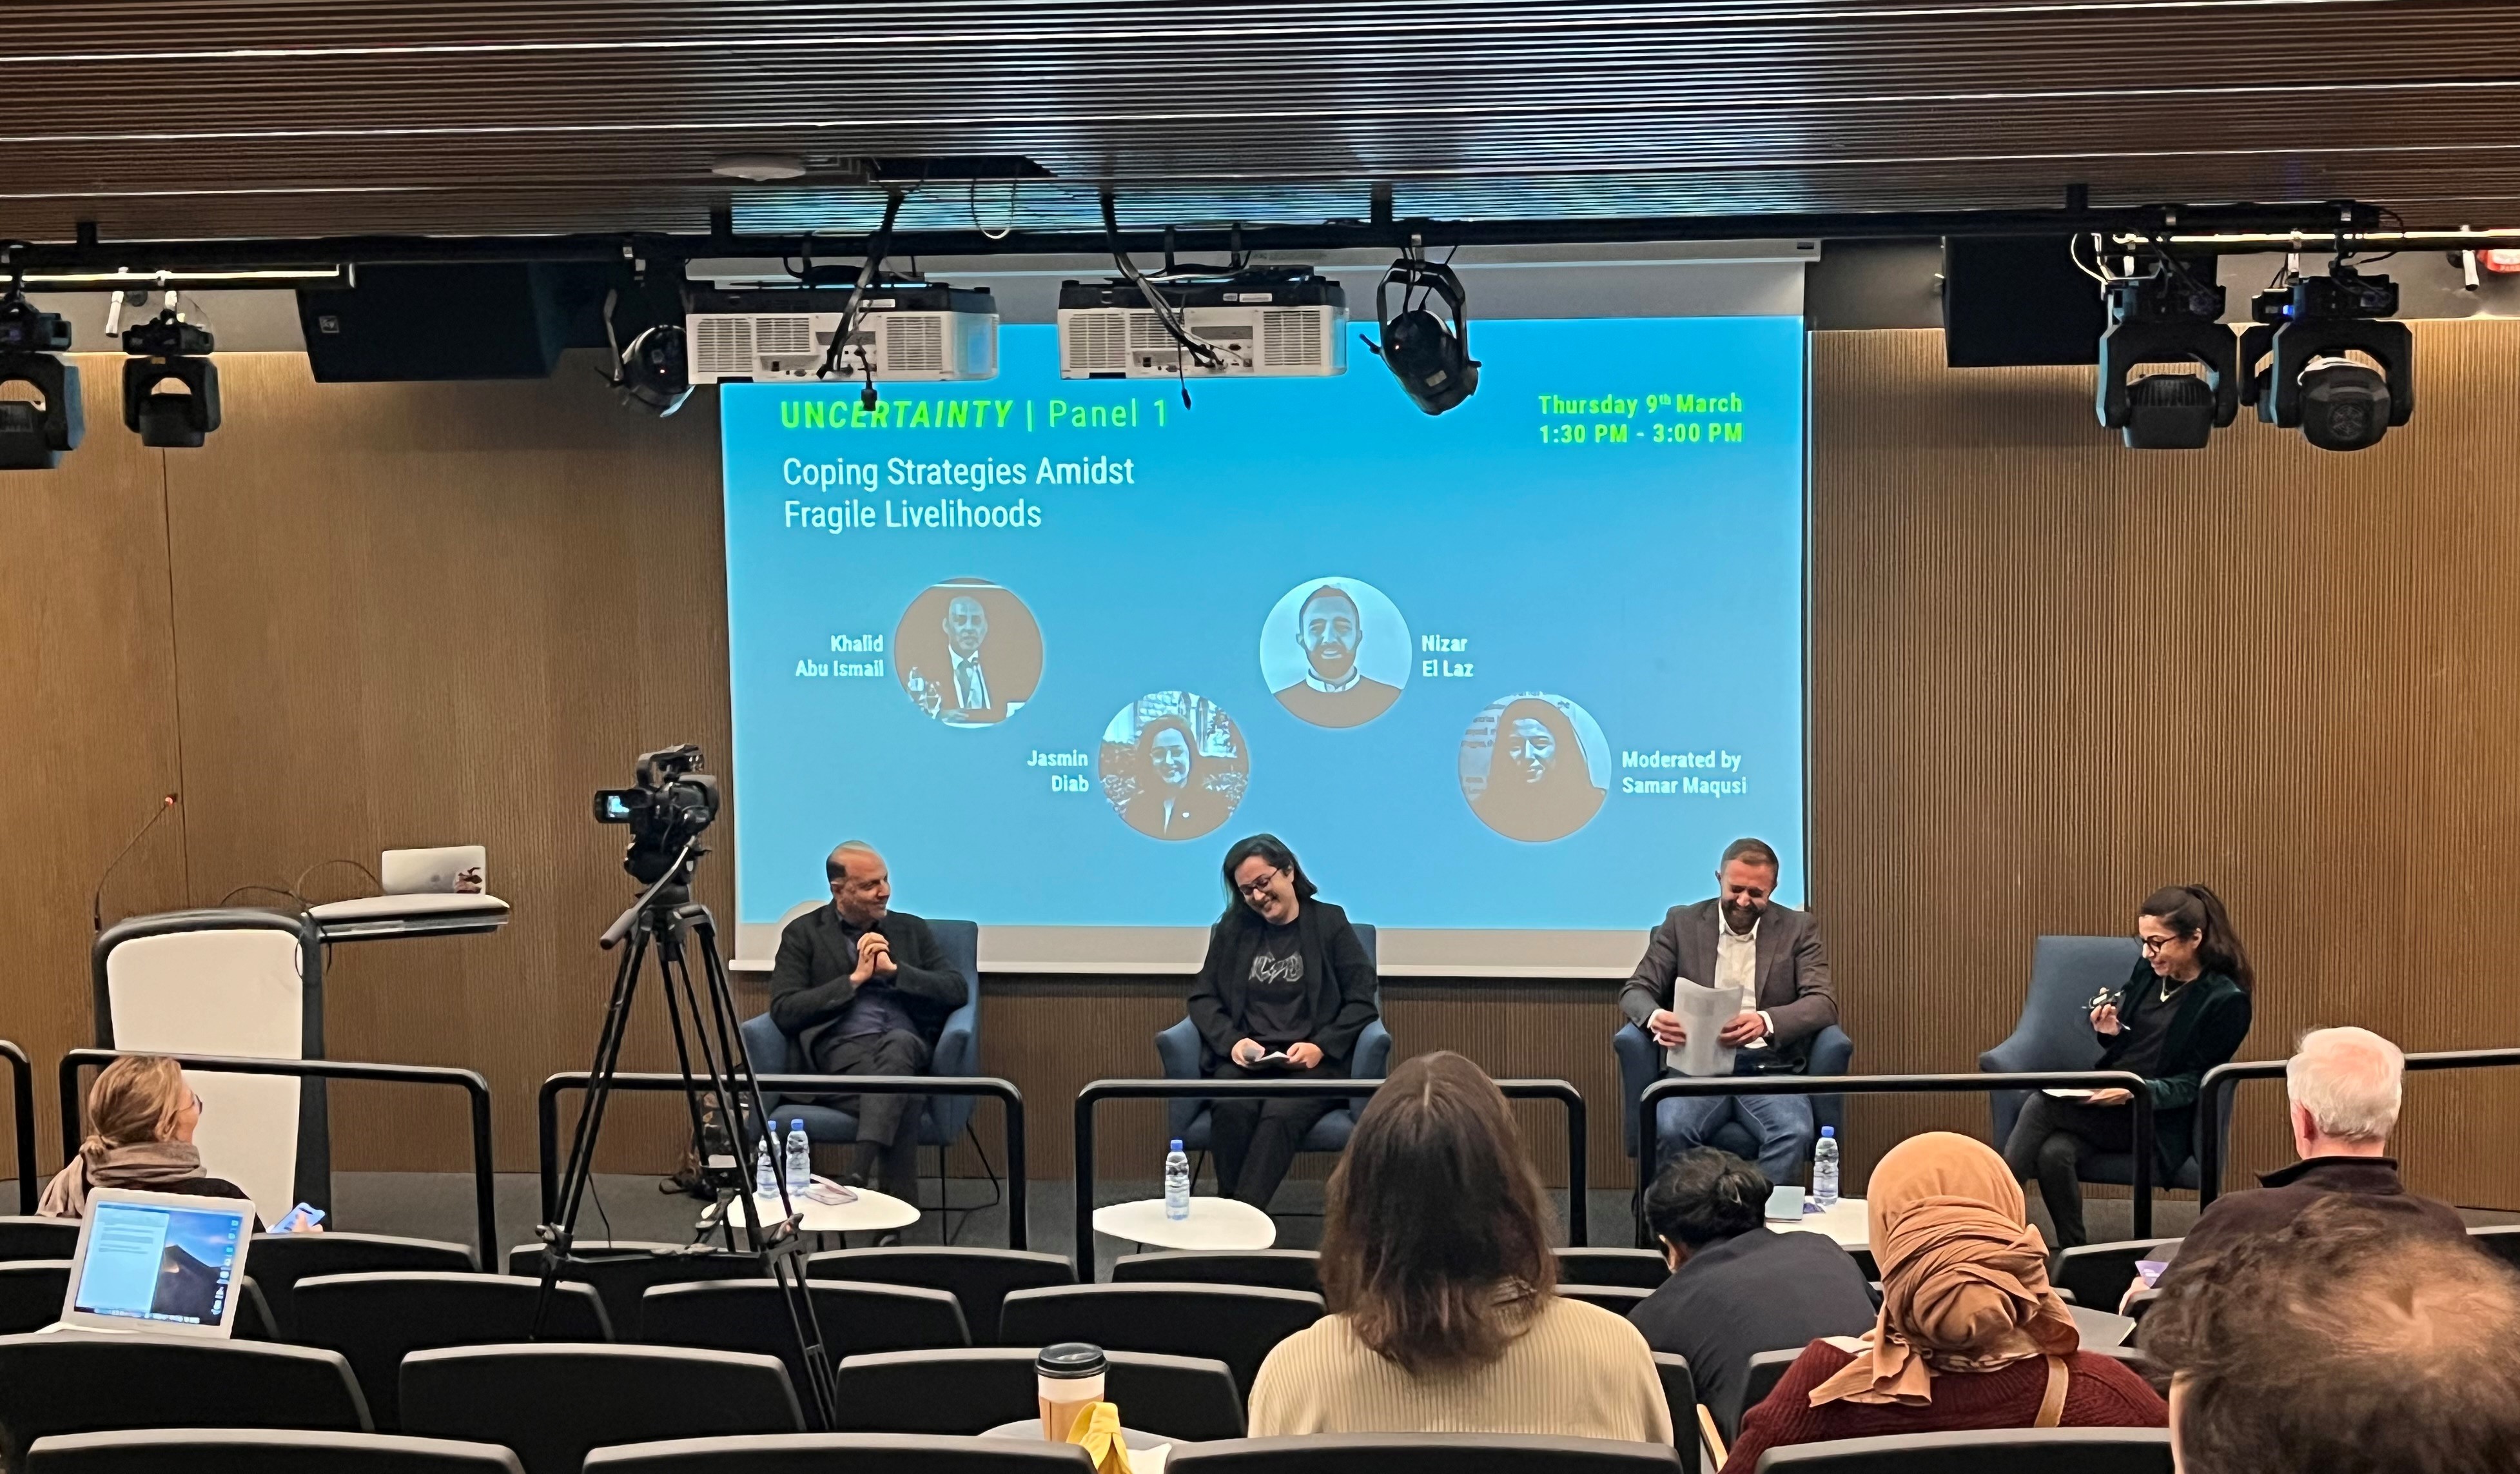 On the right, speakers of the ‘Uncertainty’ panel: Khalid Abu Ismail, Nizar El Laz, Jasmin Diab, and Samar Maqusi